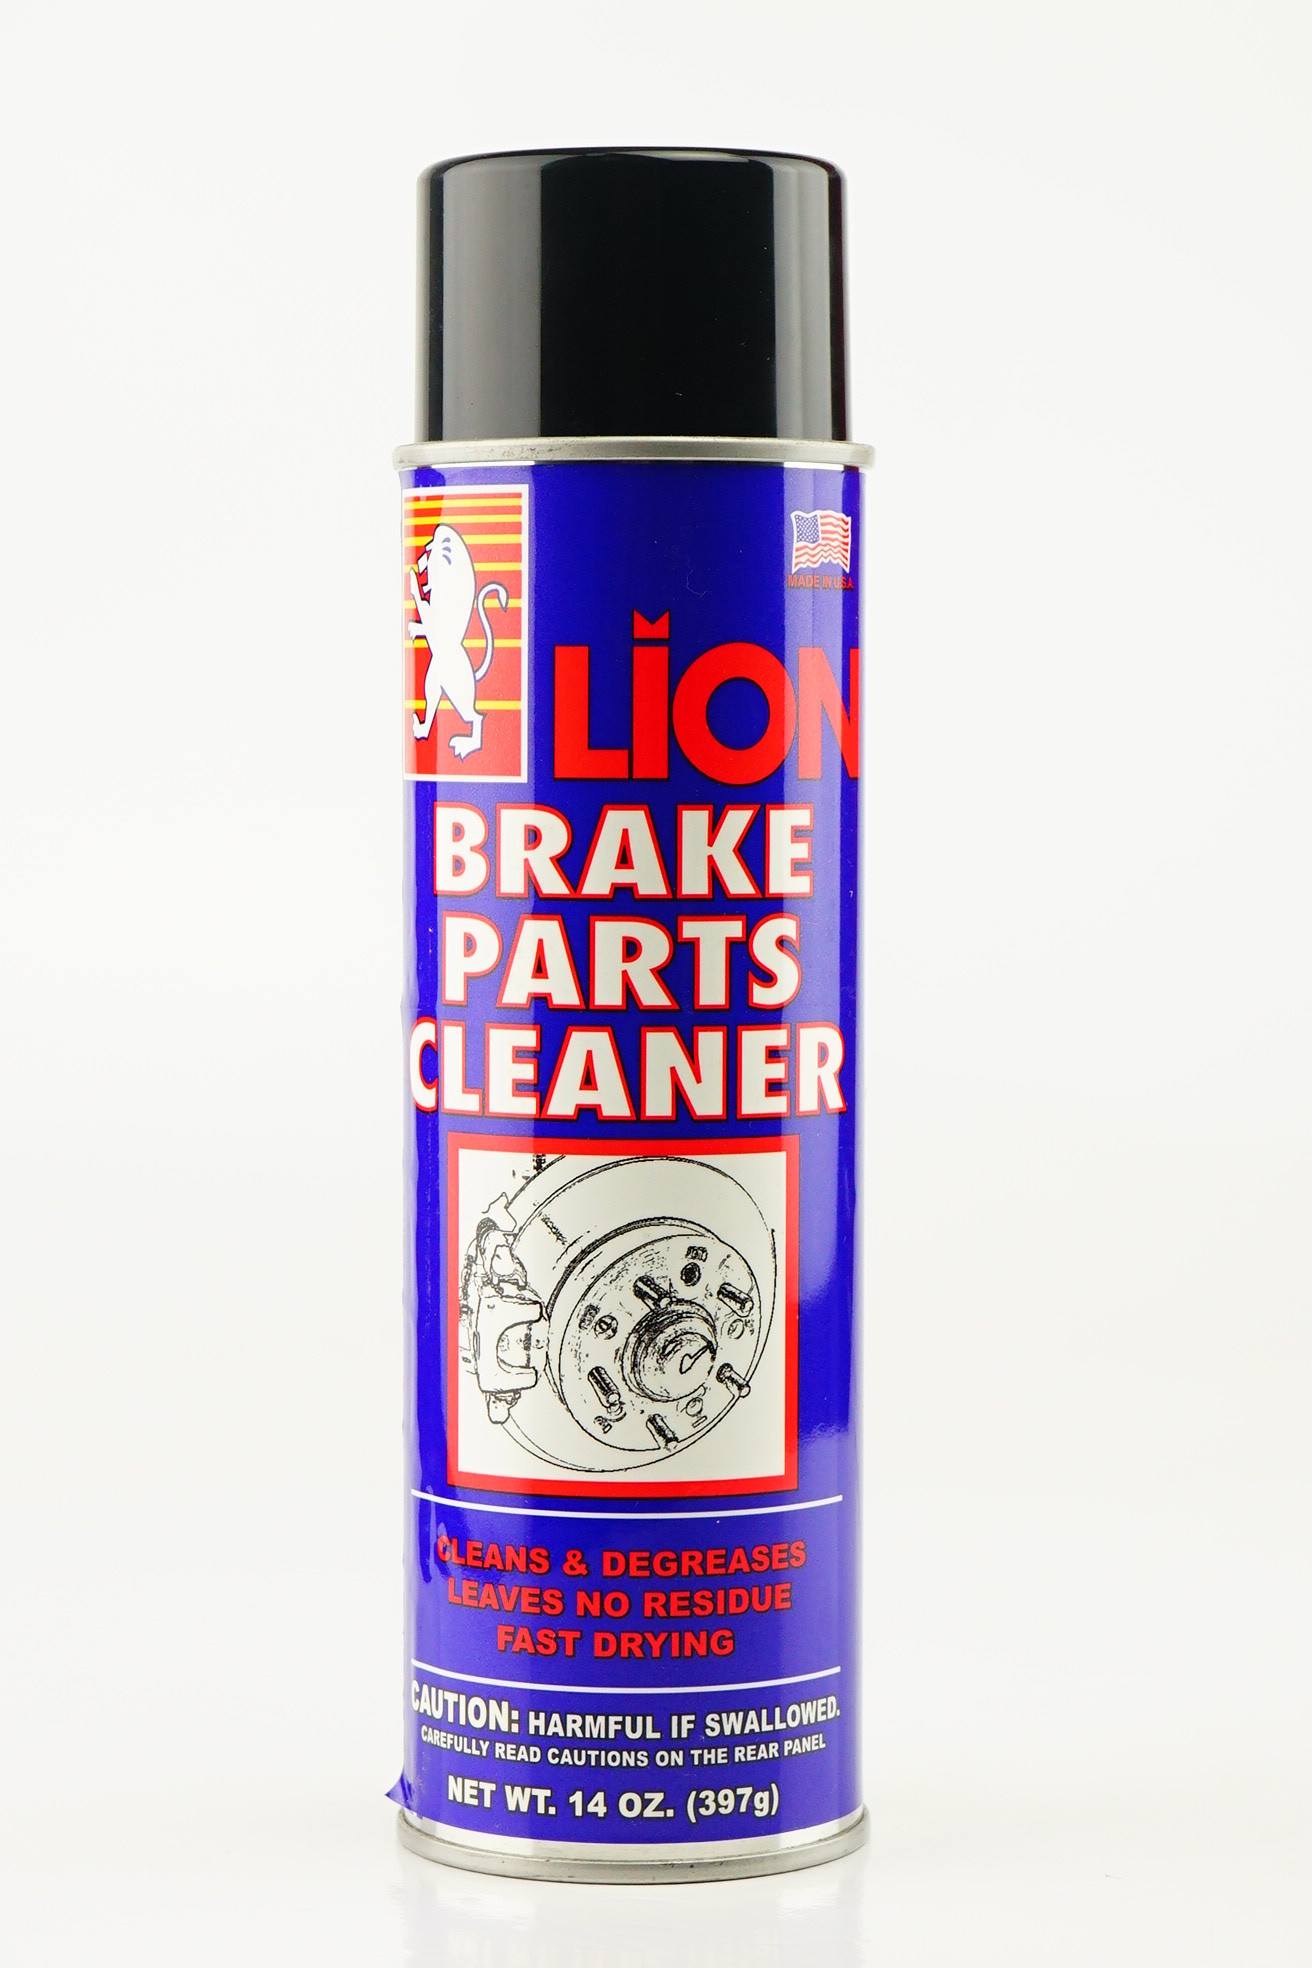 Limpiador de frenos Profesional, Brake & parts cleaner, 400 ml, 483300 SONAX